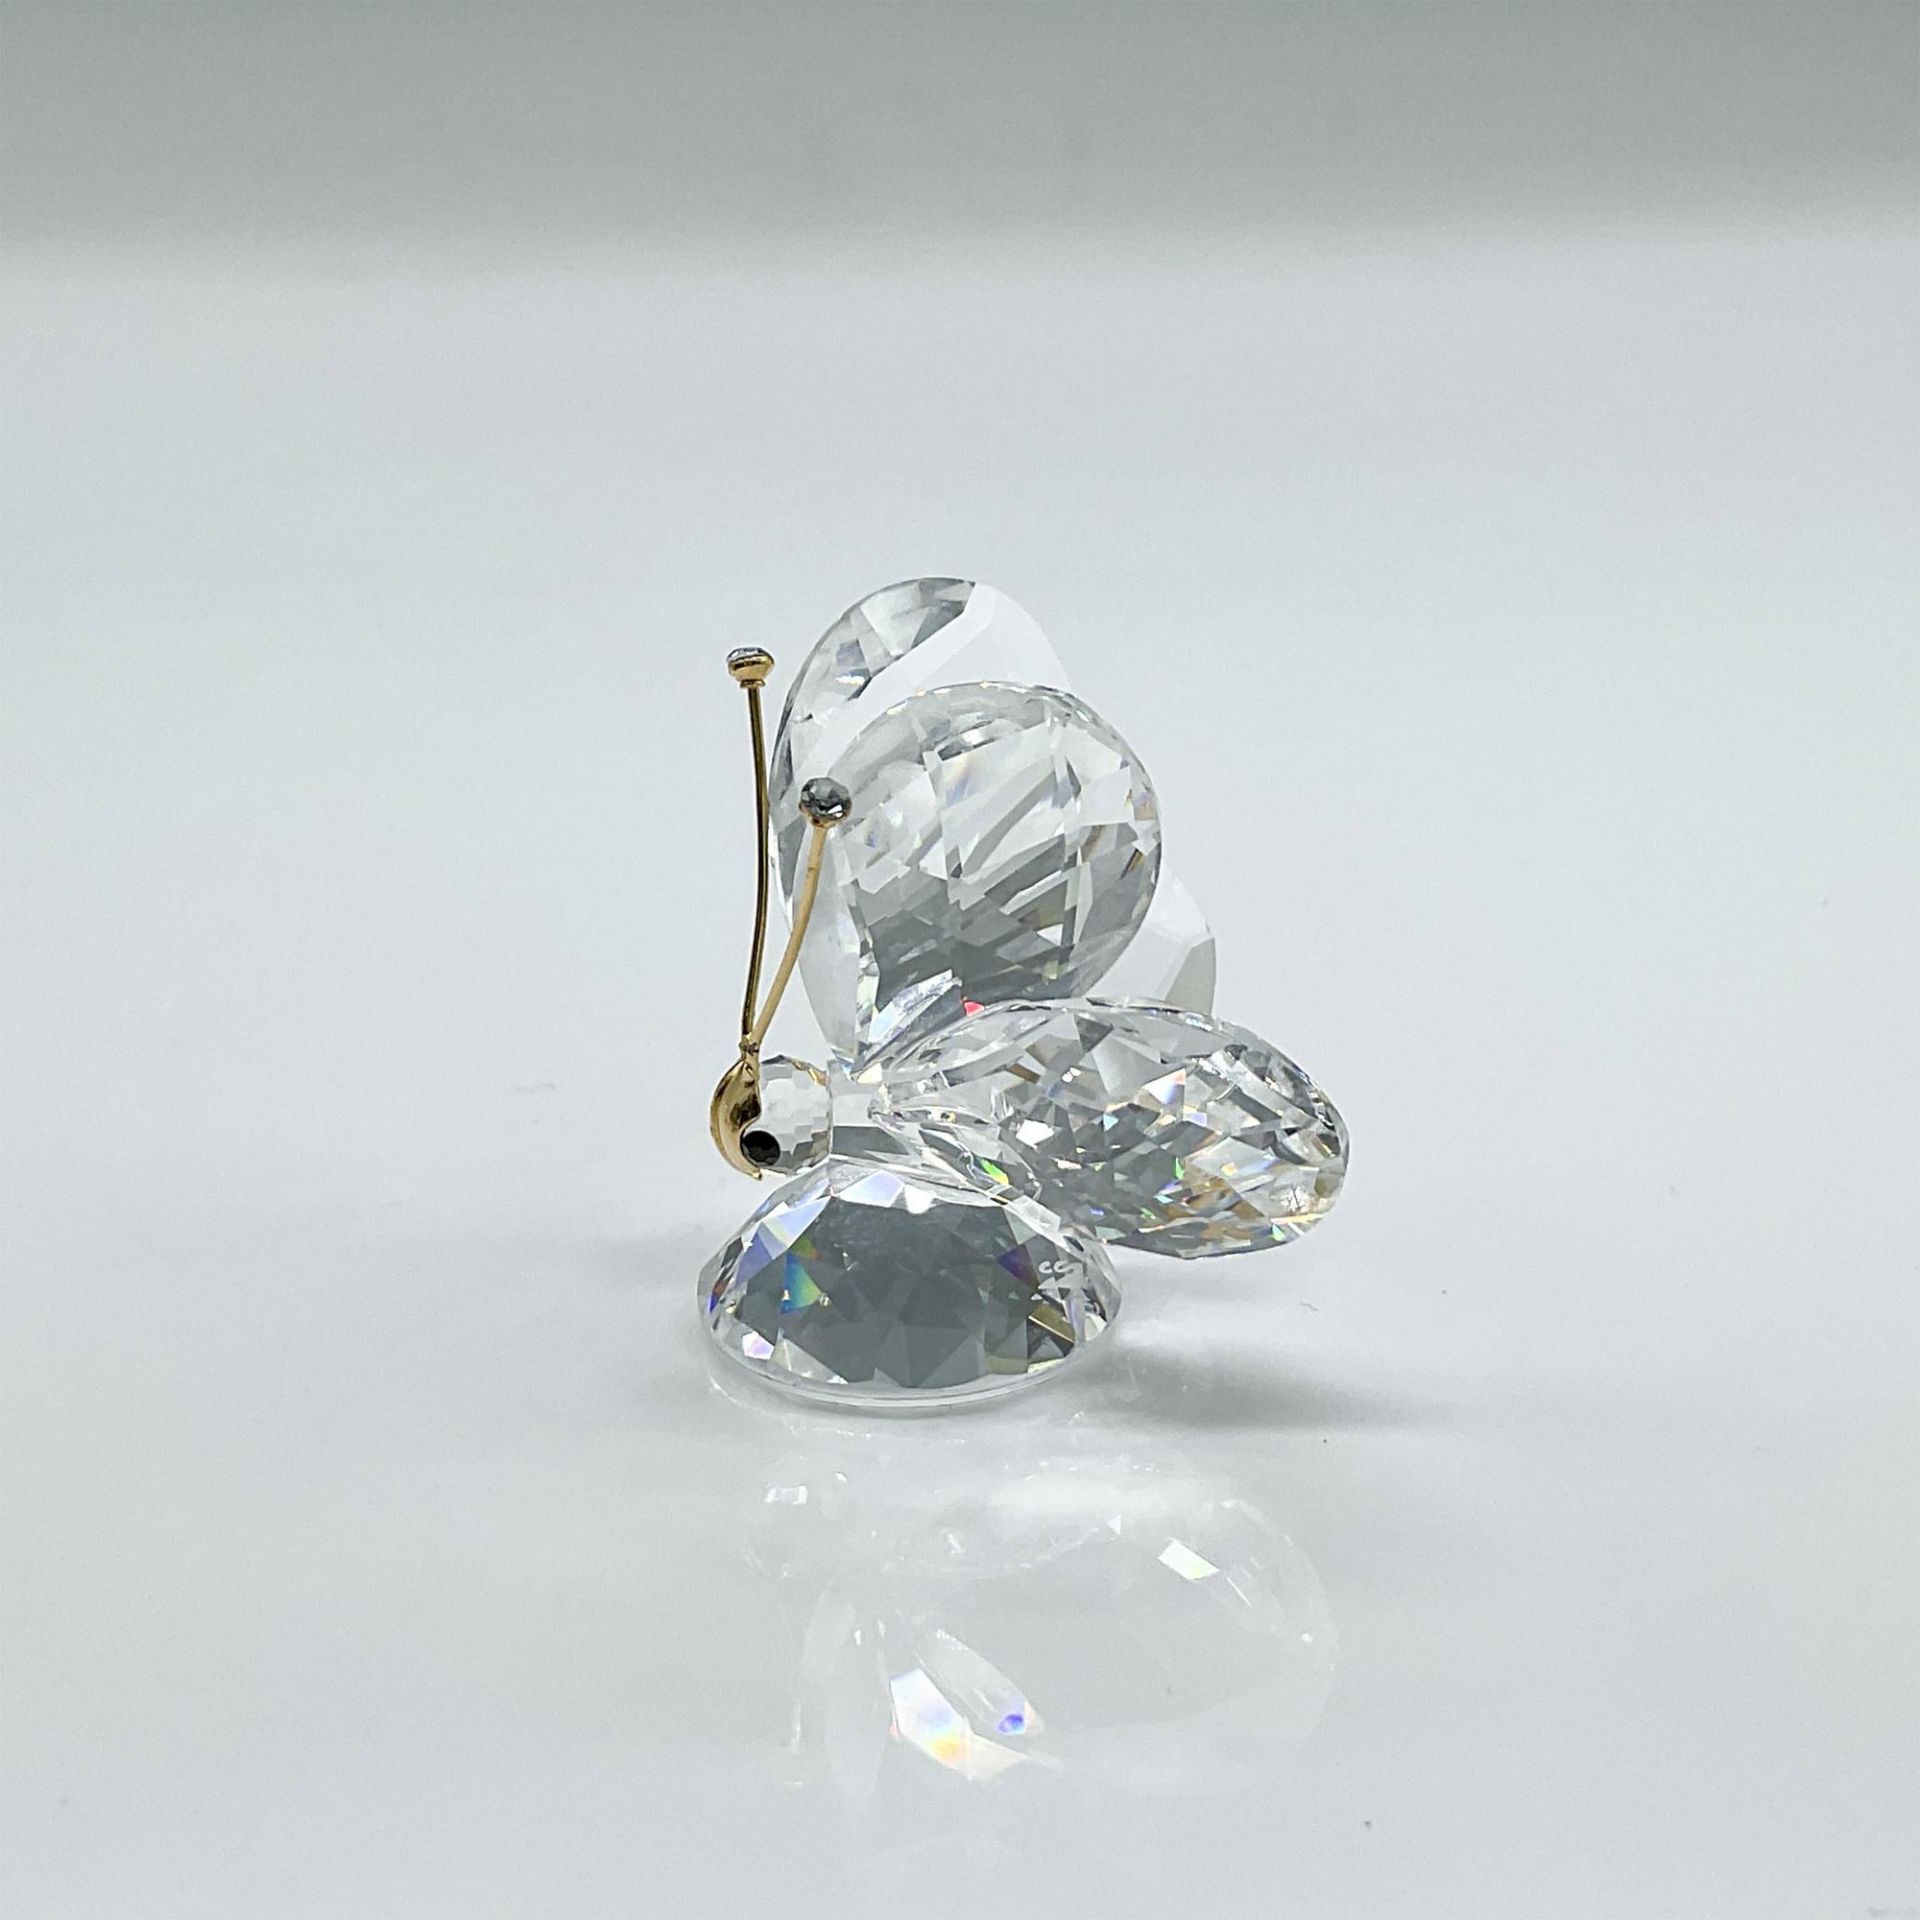 Swarovski Silver Crystal Figurine, Mini Butterfly